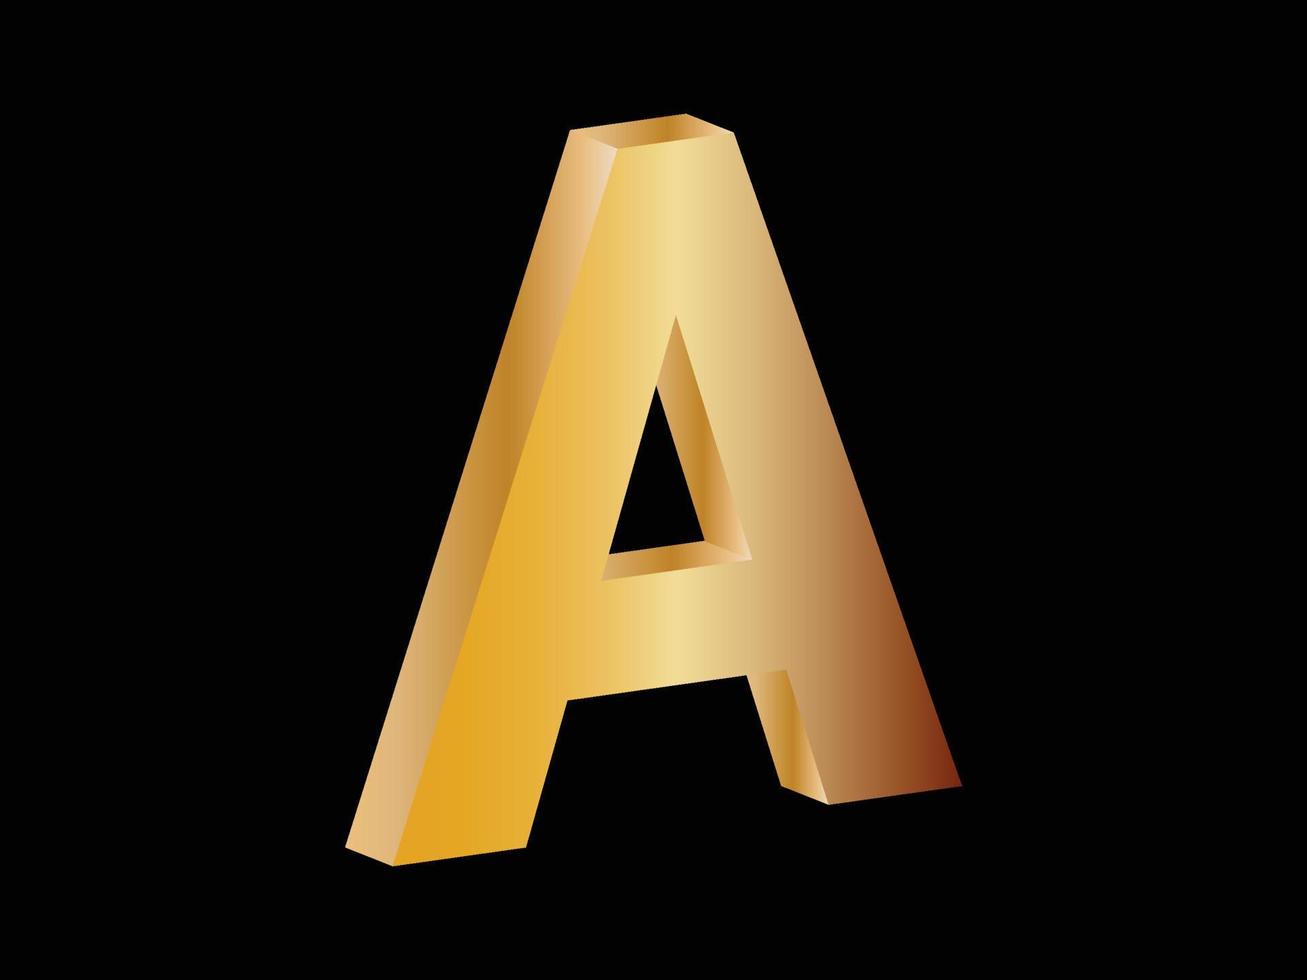 3D golden letter vector